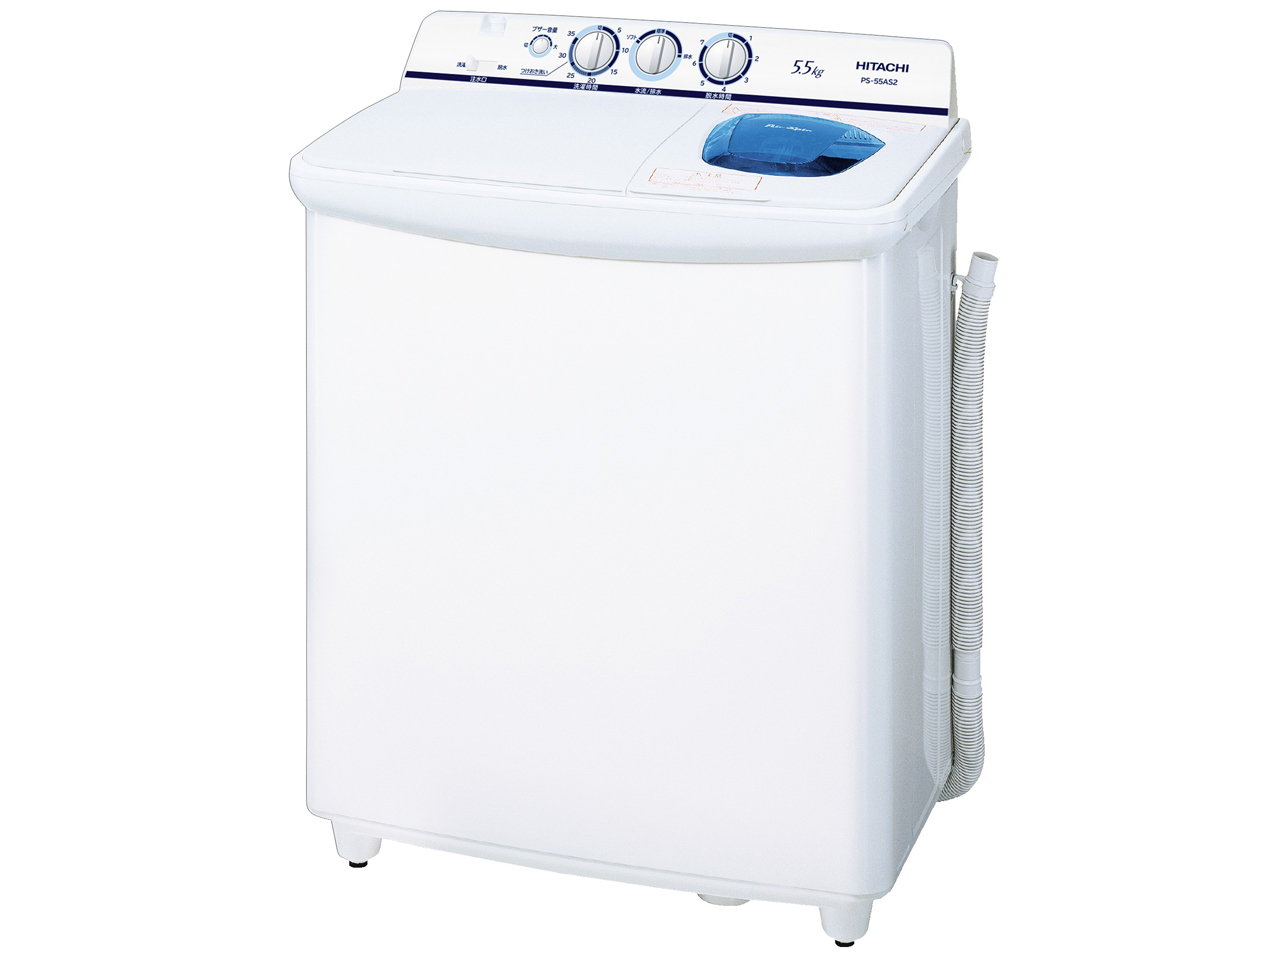 PS-55AS2-W HITACHI 日立 青空 洗濯・脱水容量5.5kg 2槽式洗濯機 ホワイト ※商品代引き不可 ※時間指定不可 ※標準配送設置無料